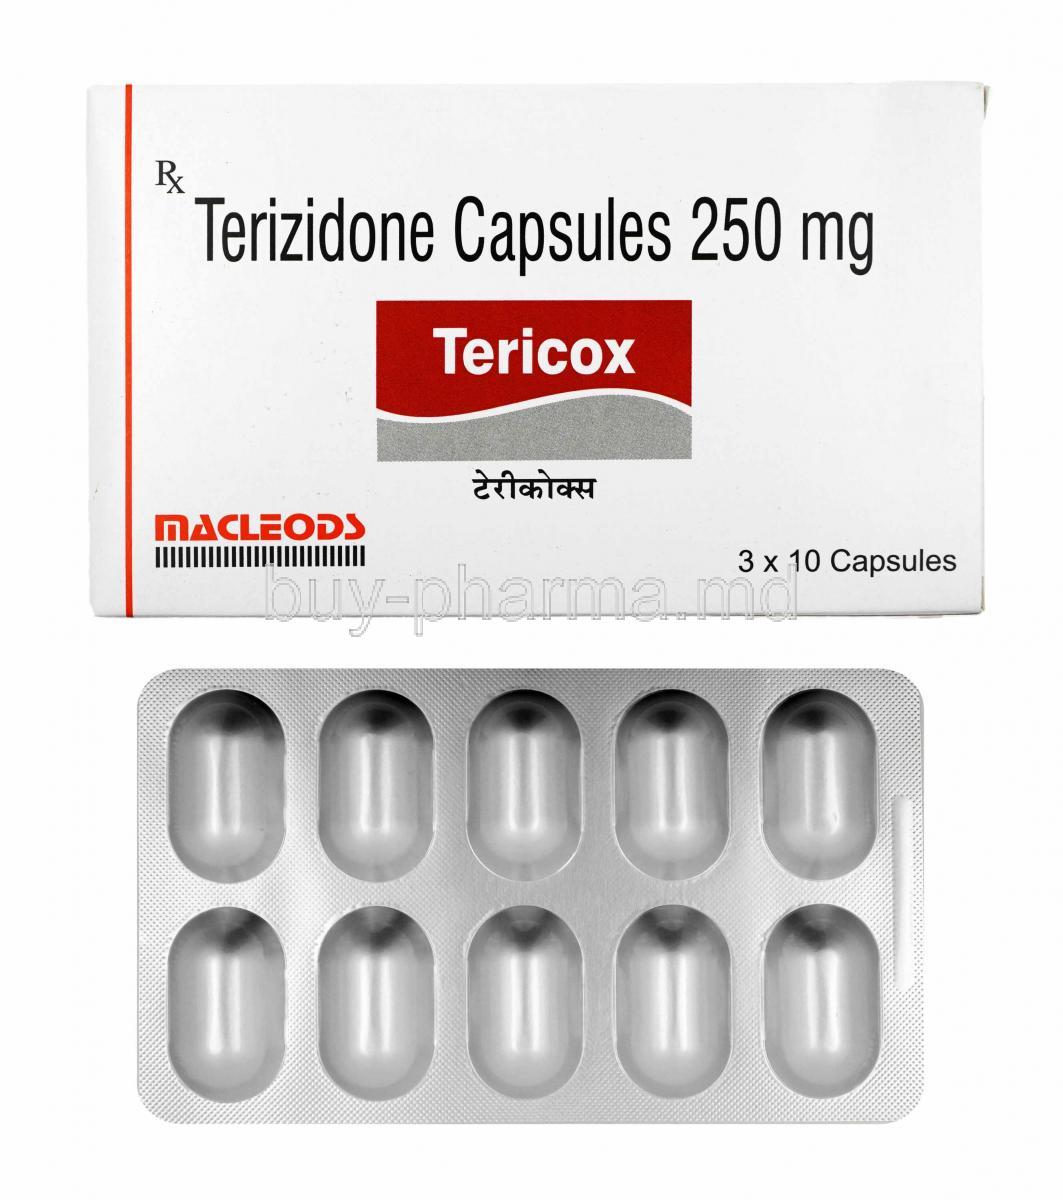 Tericox, Terizidone box and capsules